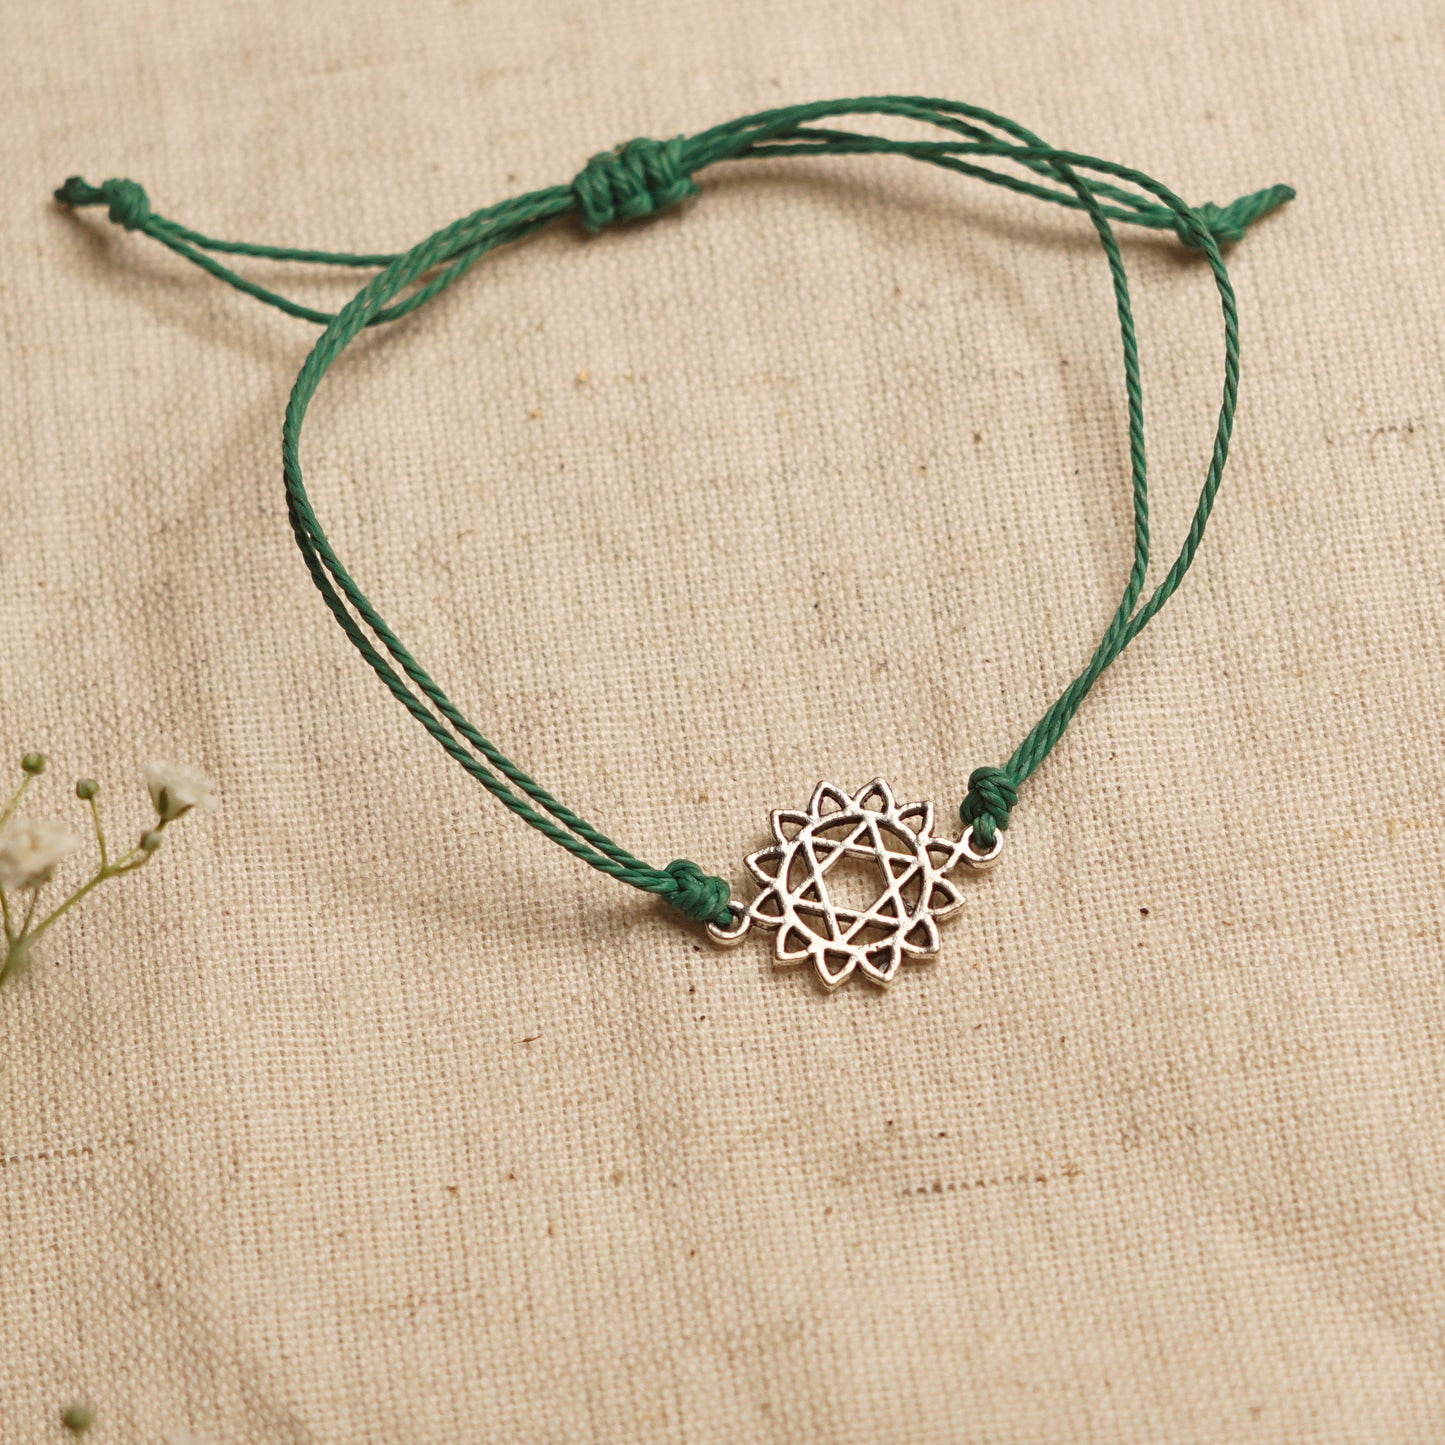 Heart Chakra Energy Bracelet with size adjustable sliding knot